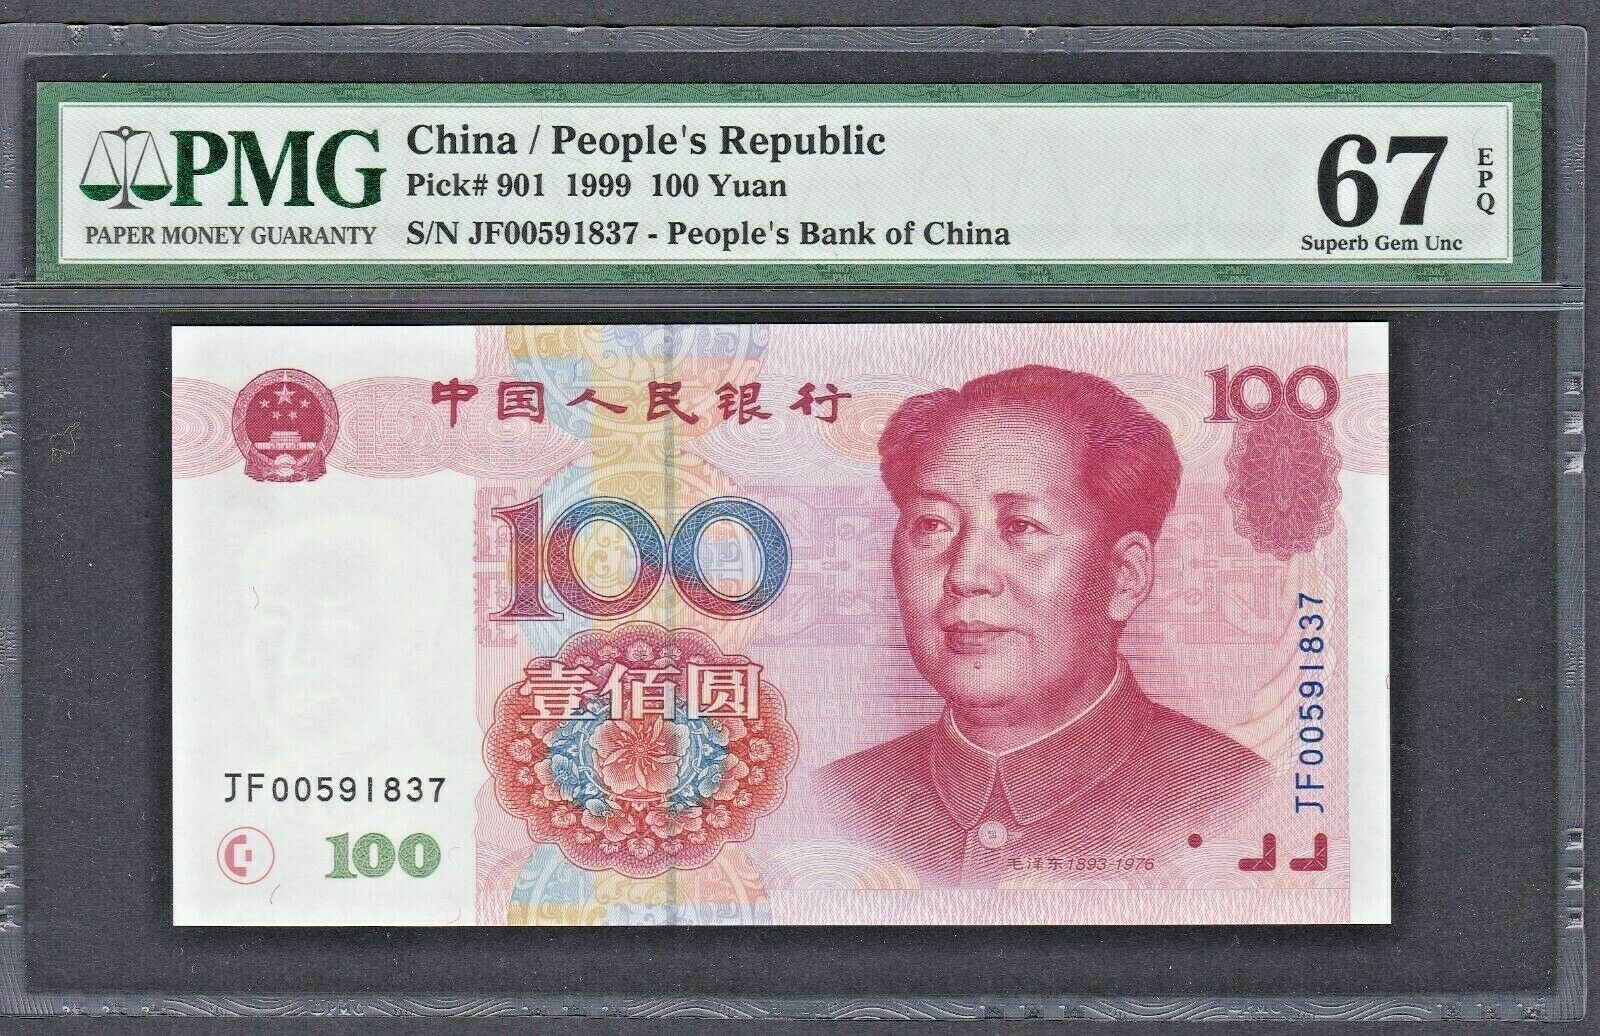 1999 Chinese Peoples Bank Of China 100 Yuan P-901 Superb Gem Unc Pmg 67 Epq